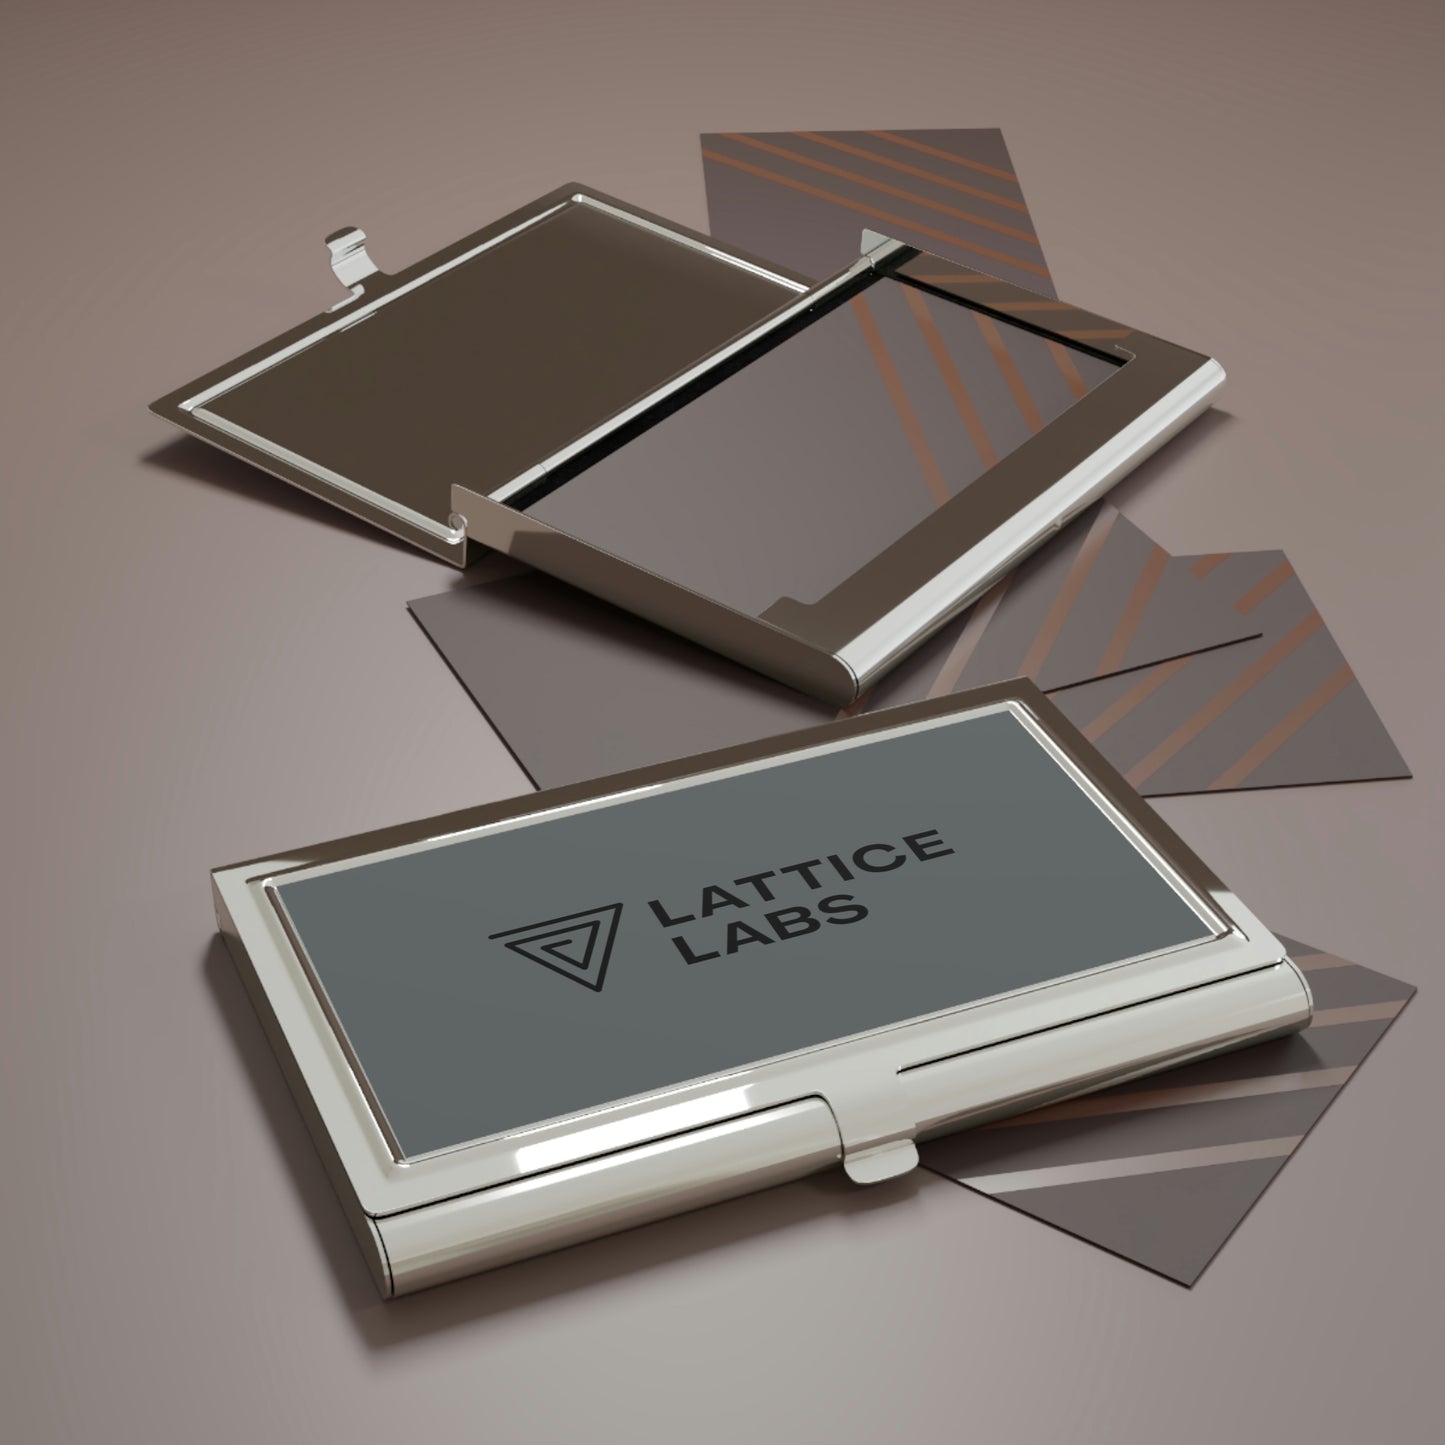 Lattice Labs Business Card Holder